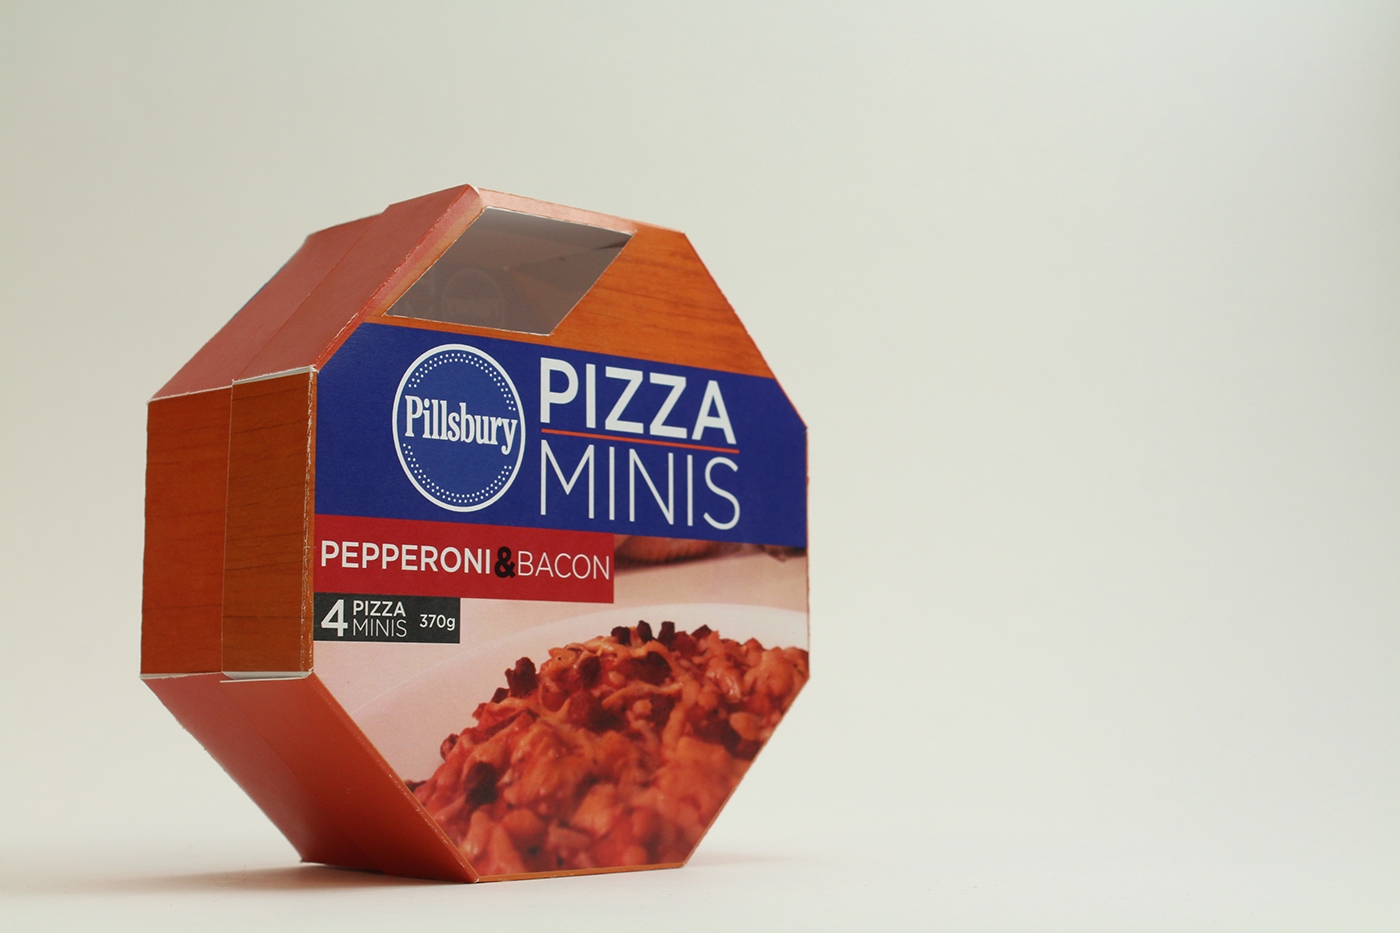 Pilsbury Pizza pizza minis